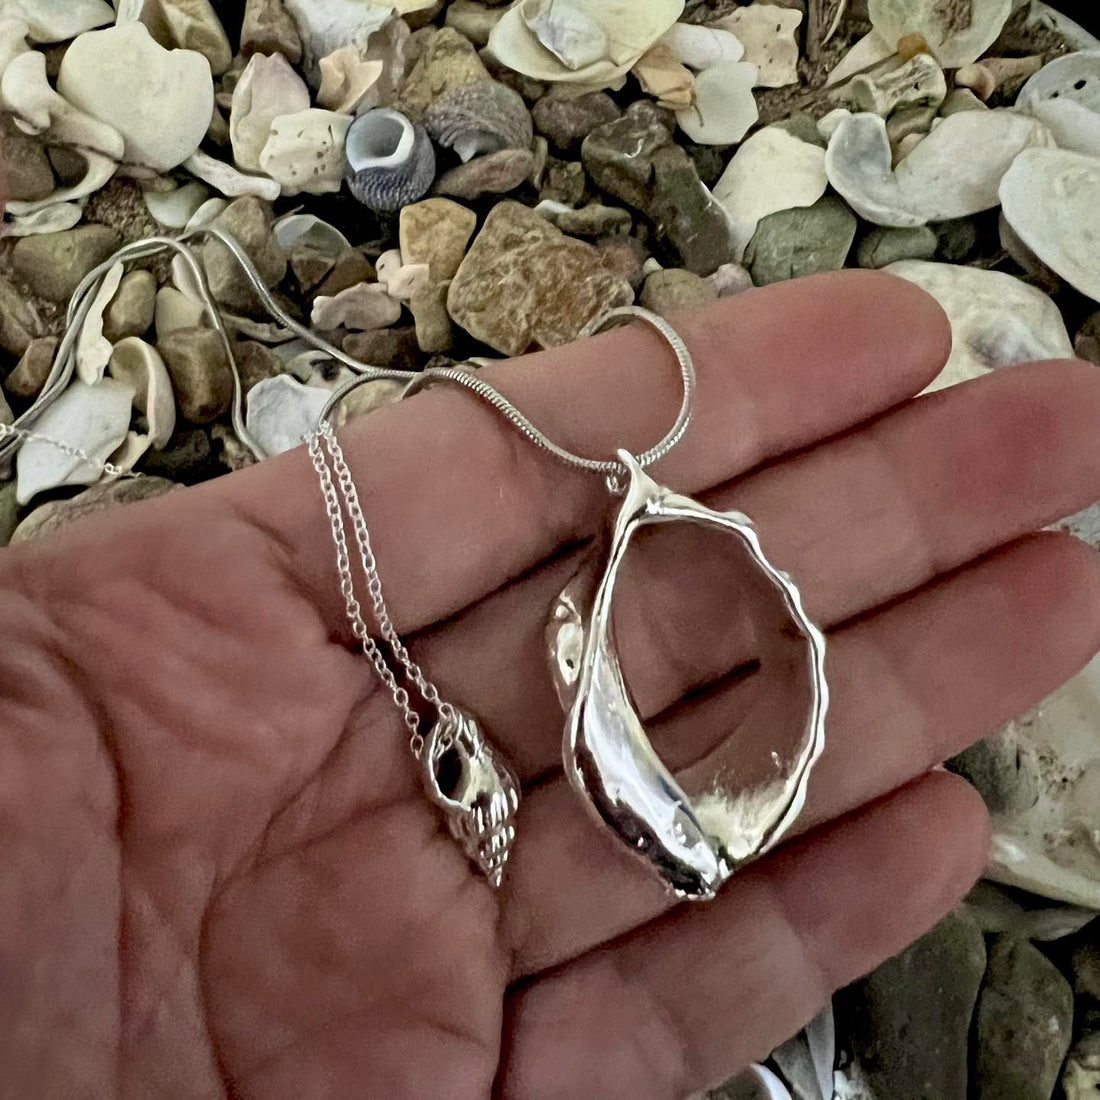 These necklaces showcasing broken sea snail shells (whelk & trumpet)